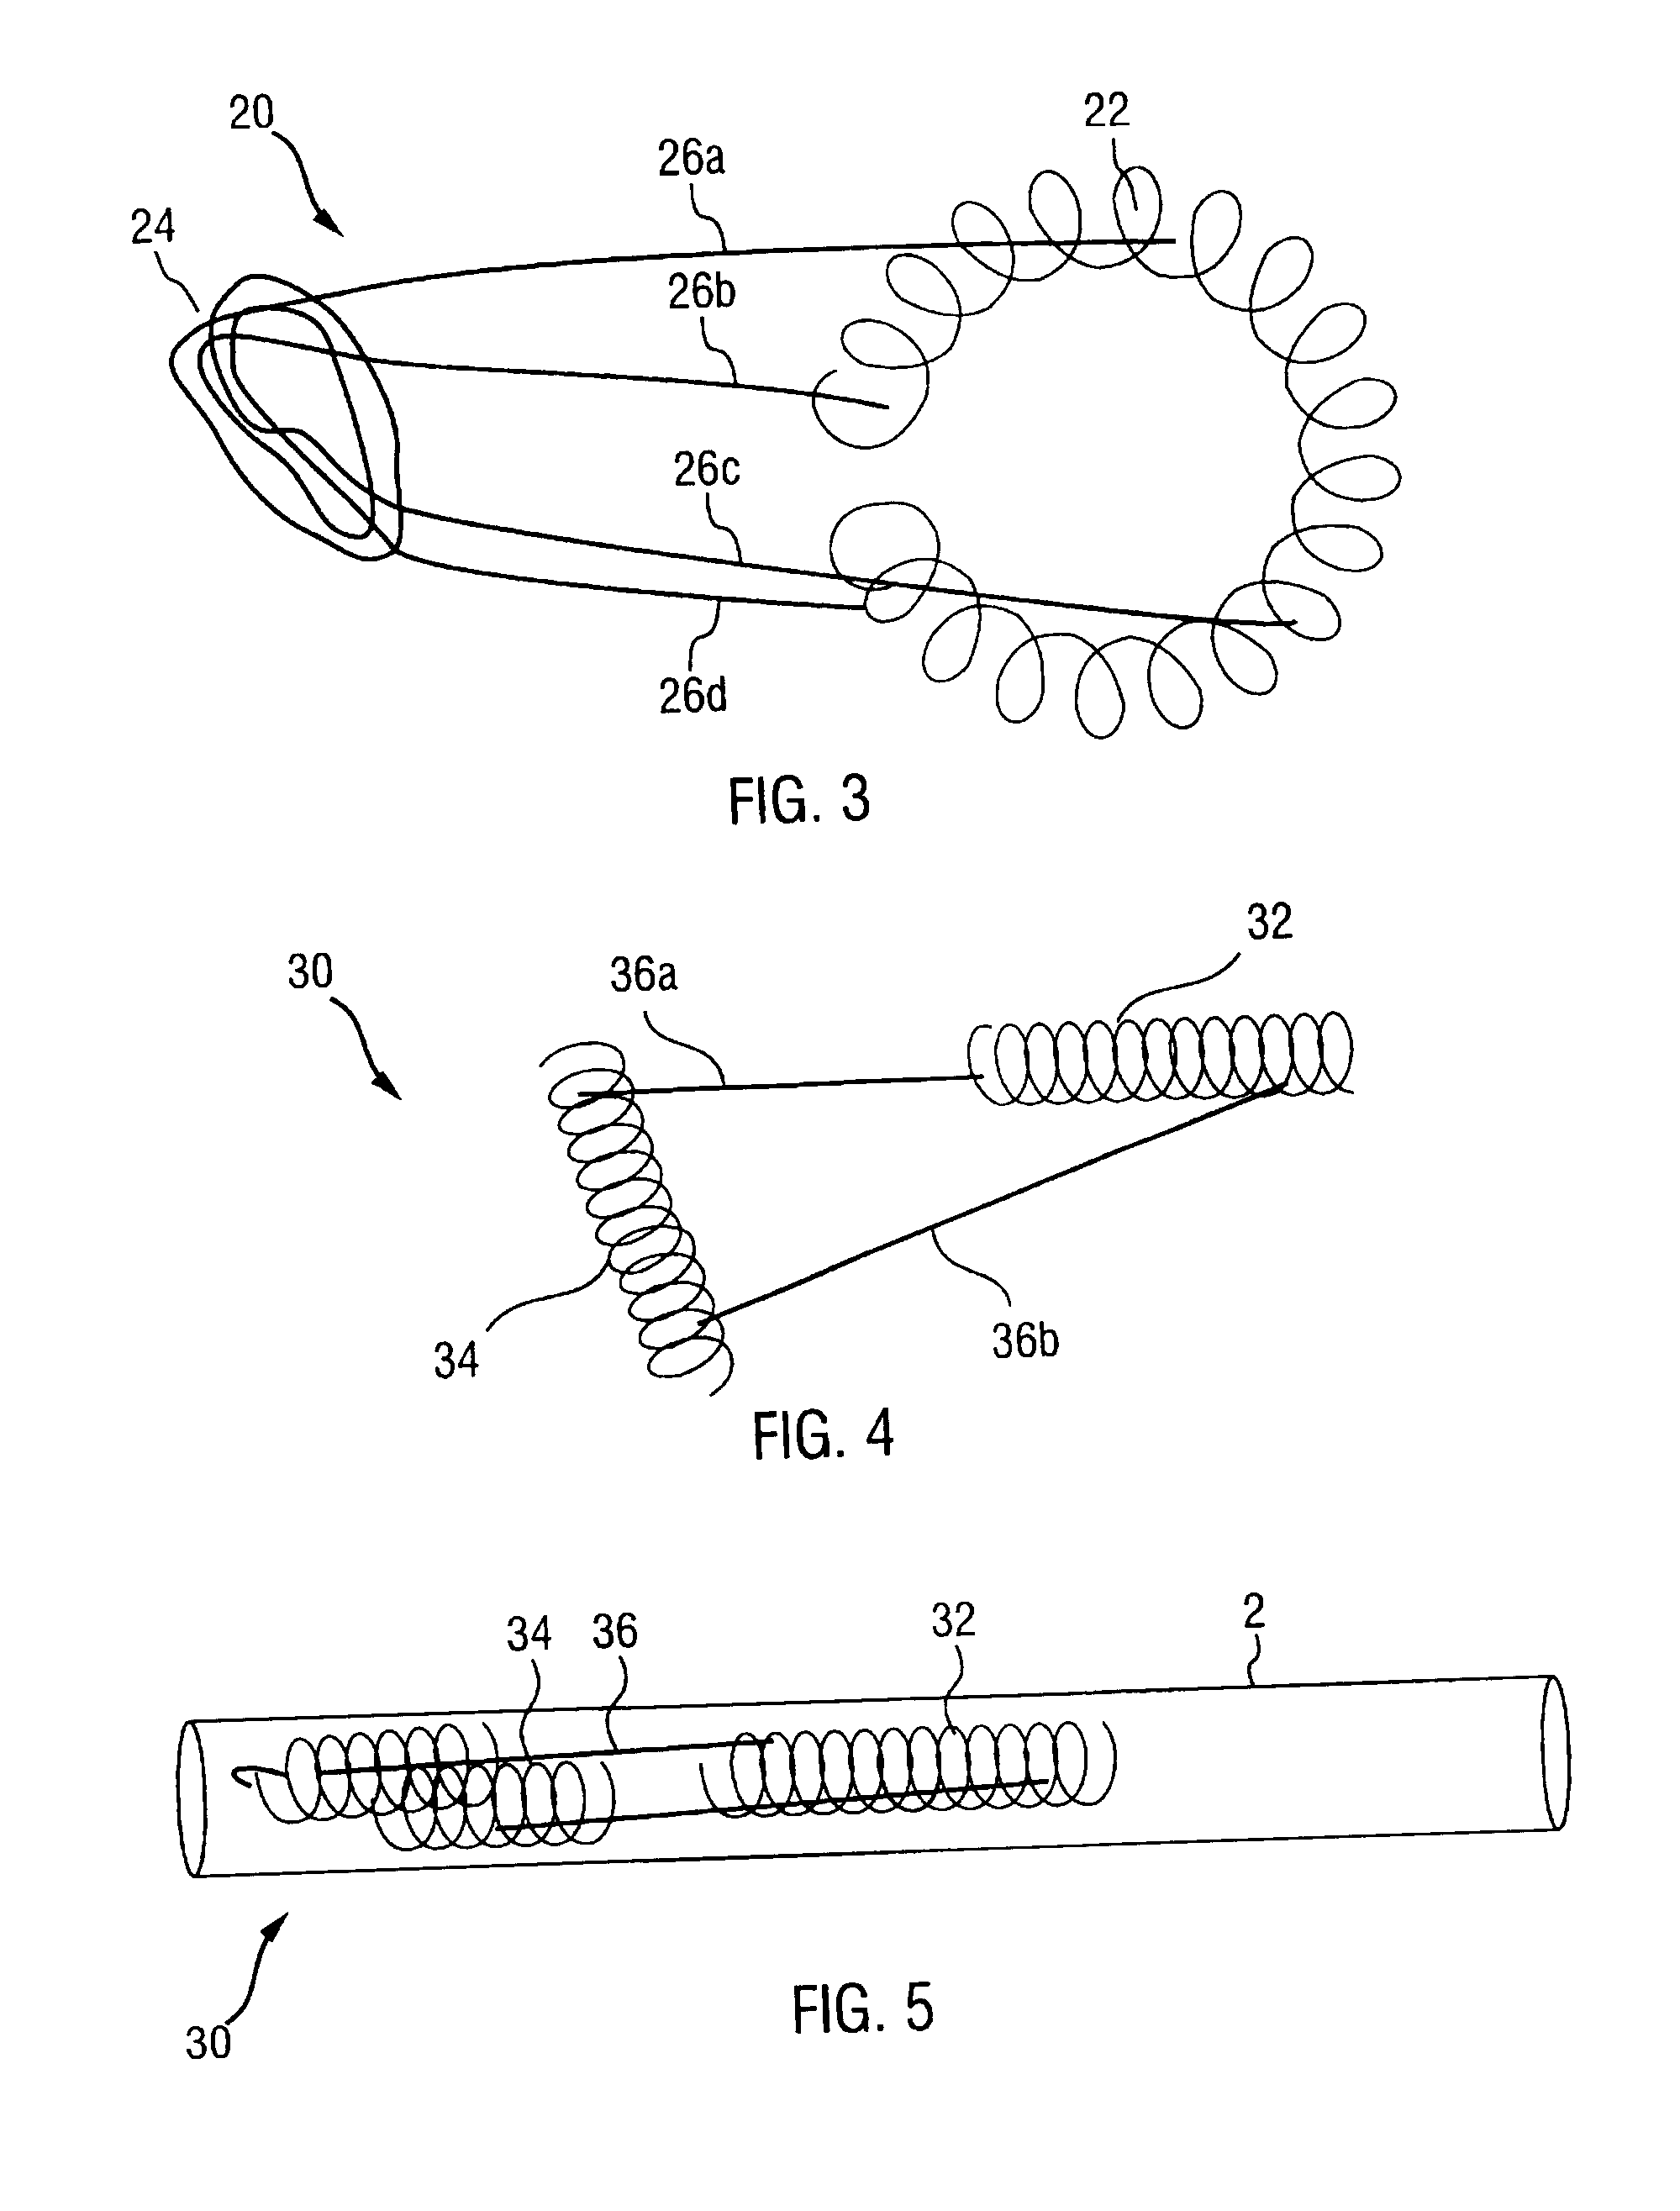 Intravascular device